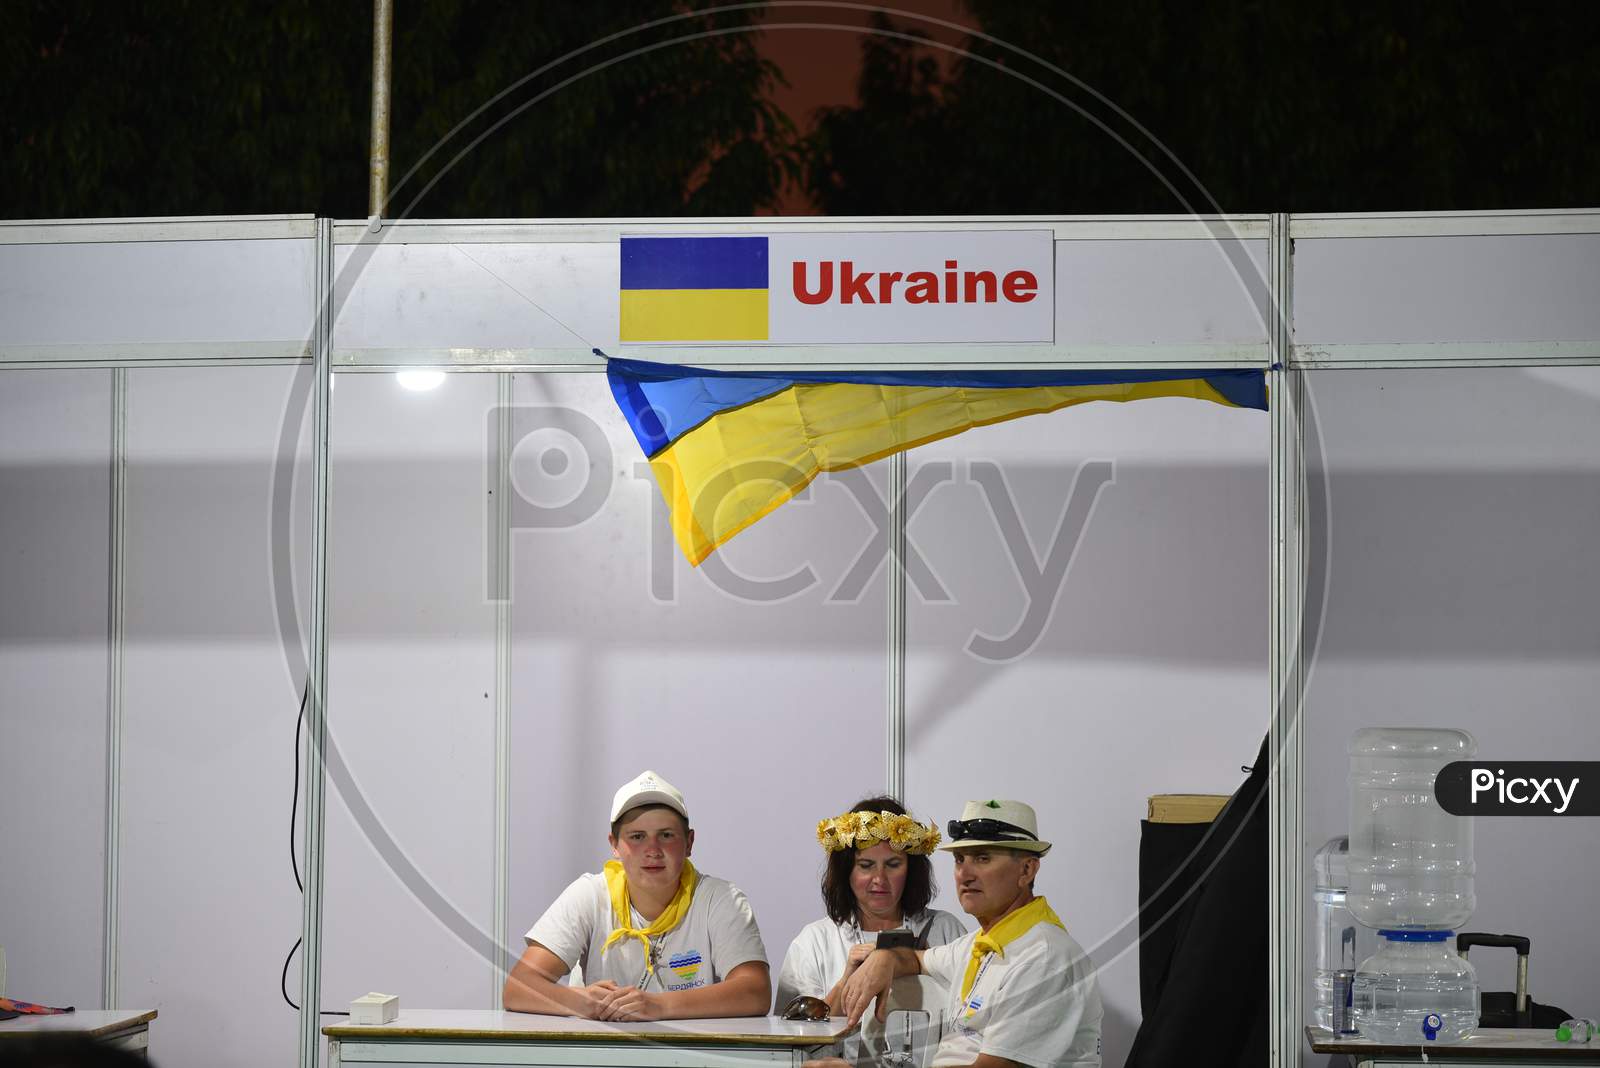 Ukraine stall at International Kite Festival 2020, Parade Grounds,Hyderabad.